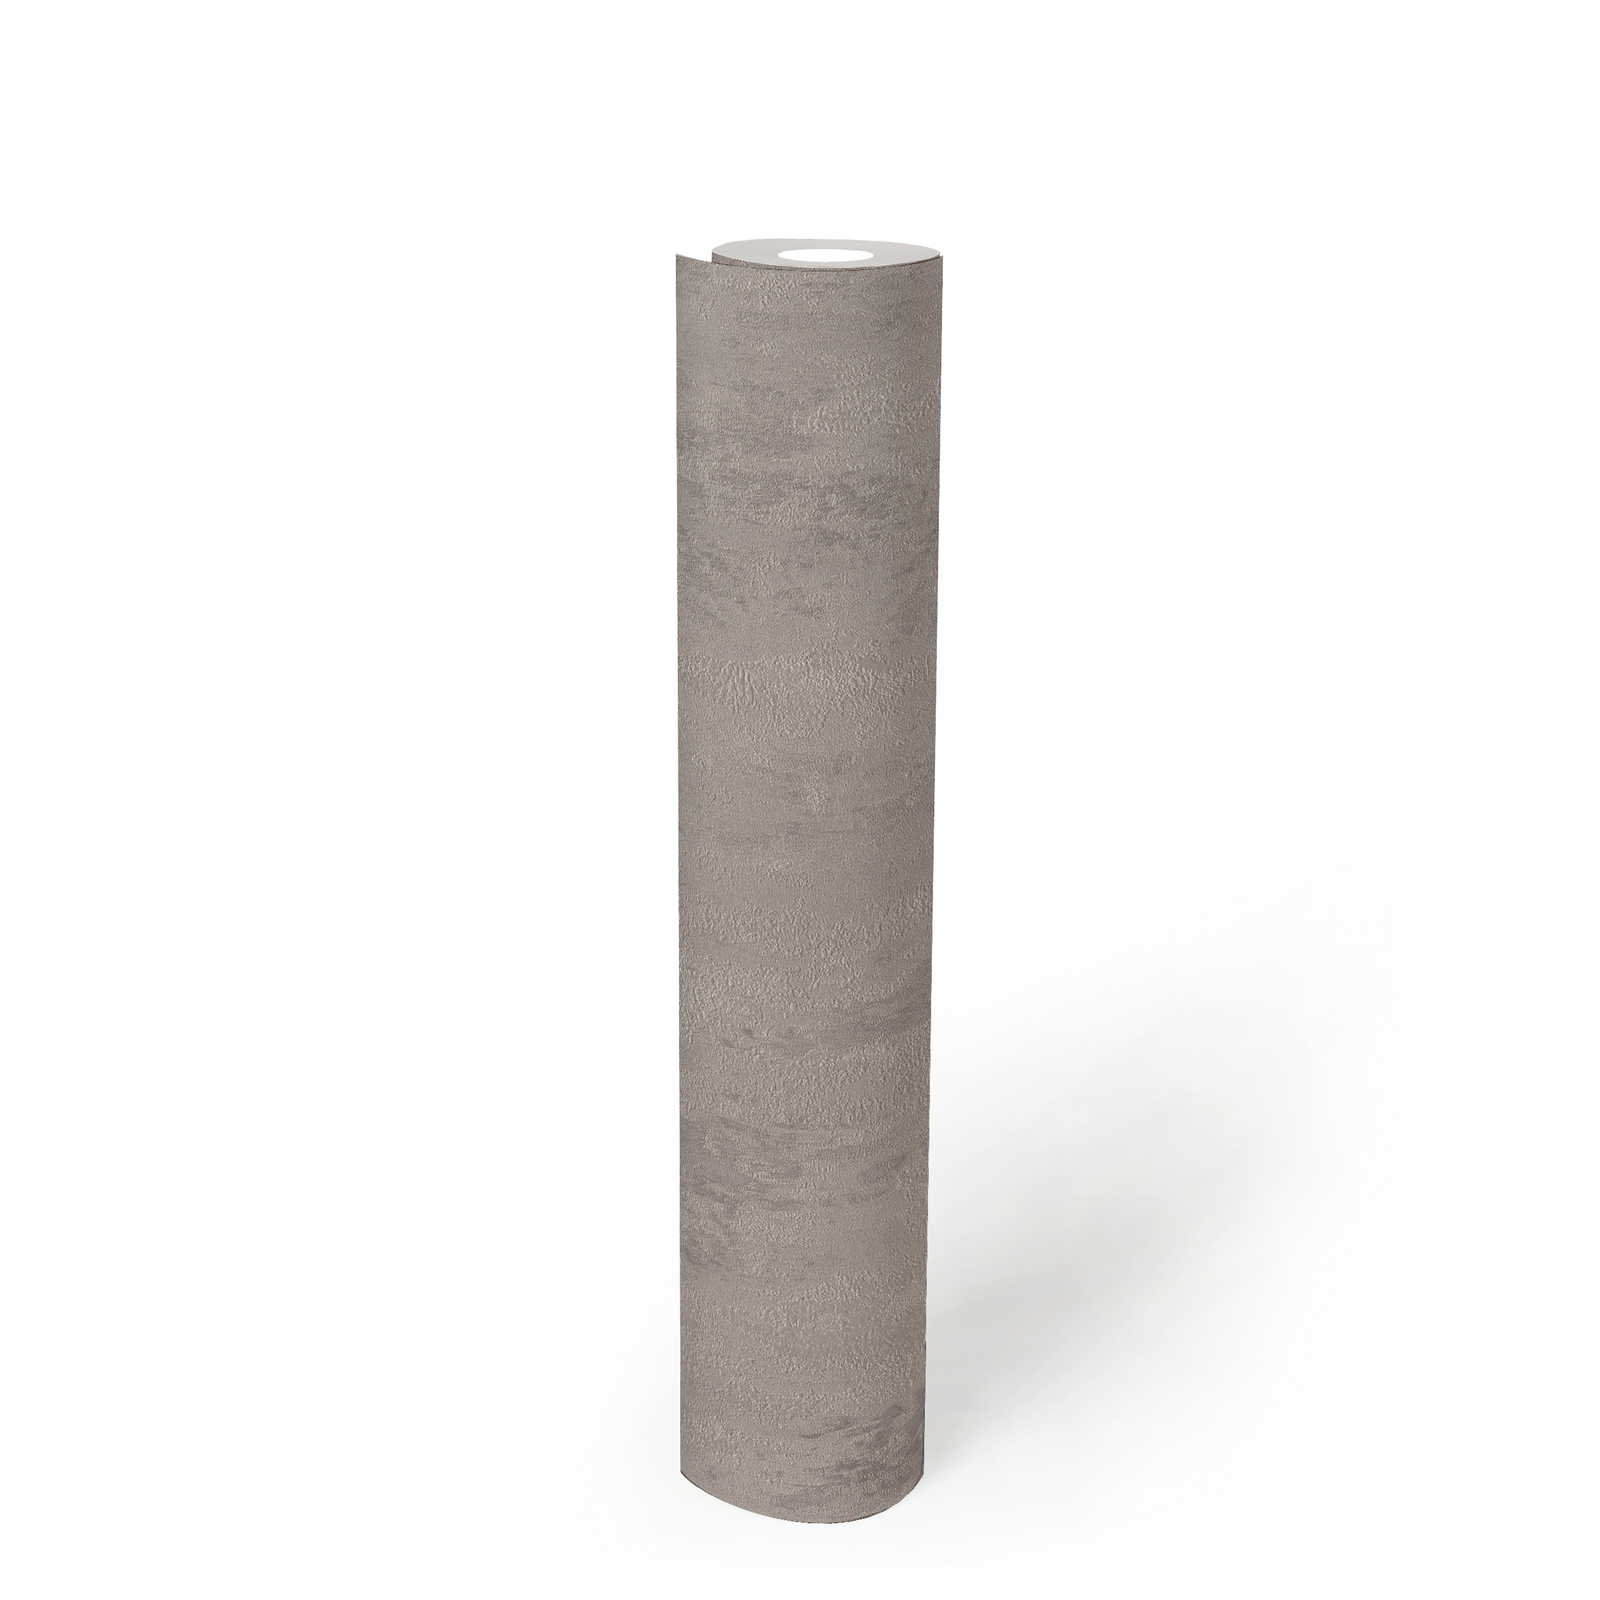             Tapete Industrial Stil mit Struktureffekt – Creme, Grau, Metallic
        